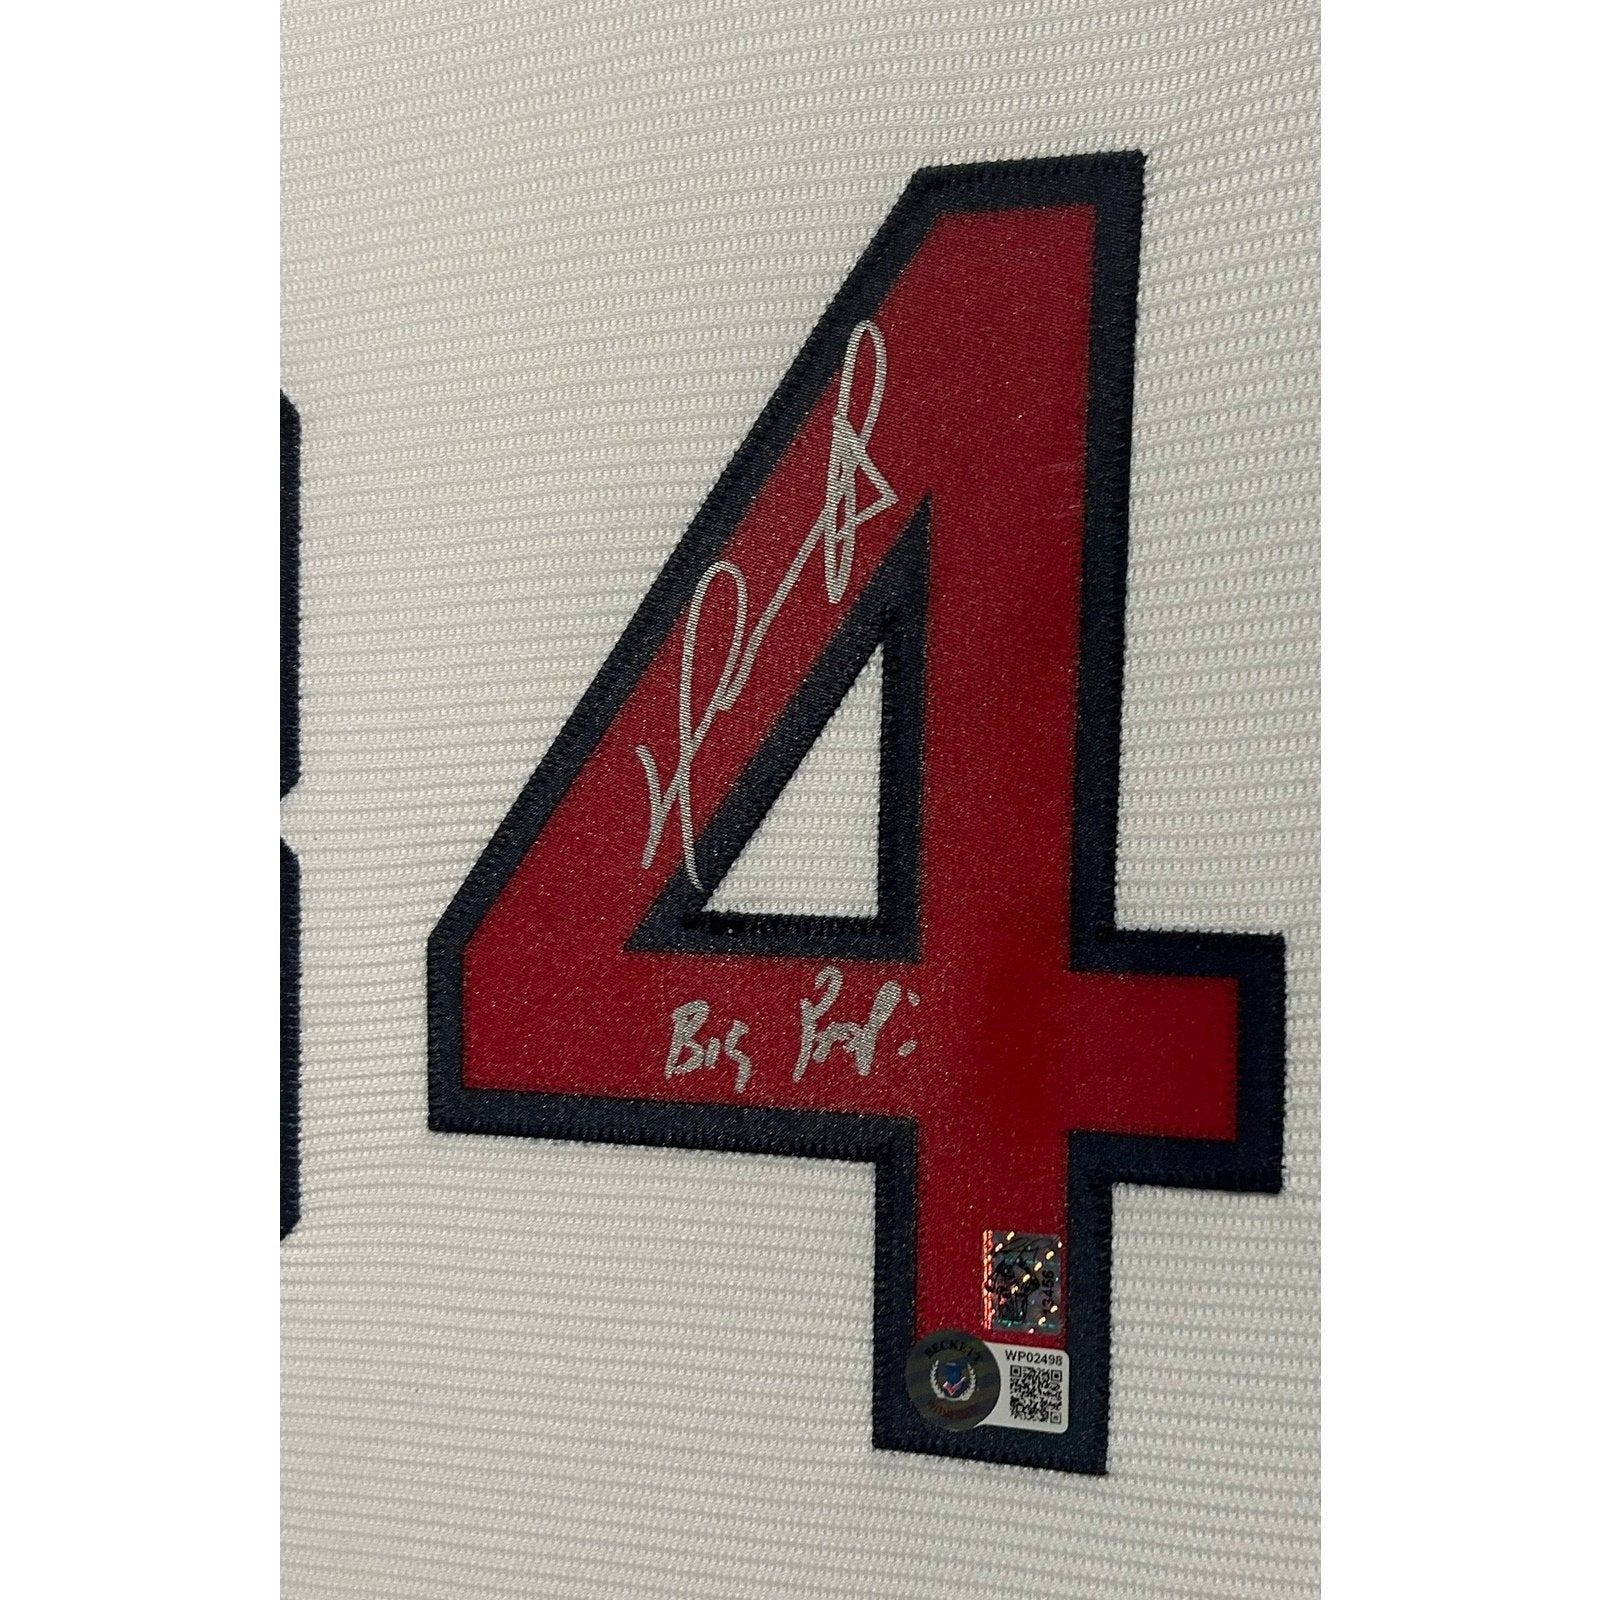 David Ortiz Big Papi Framed Signed Boston Red Sox Jersey Beckett Autographed